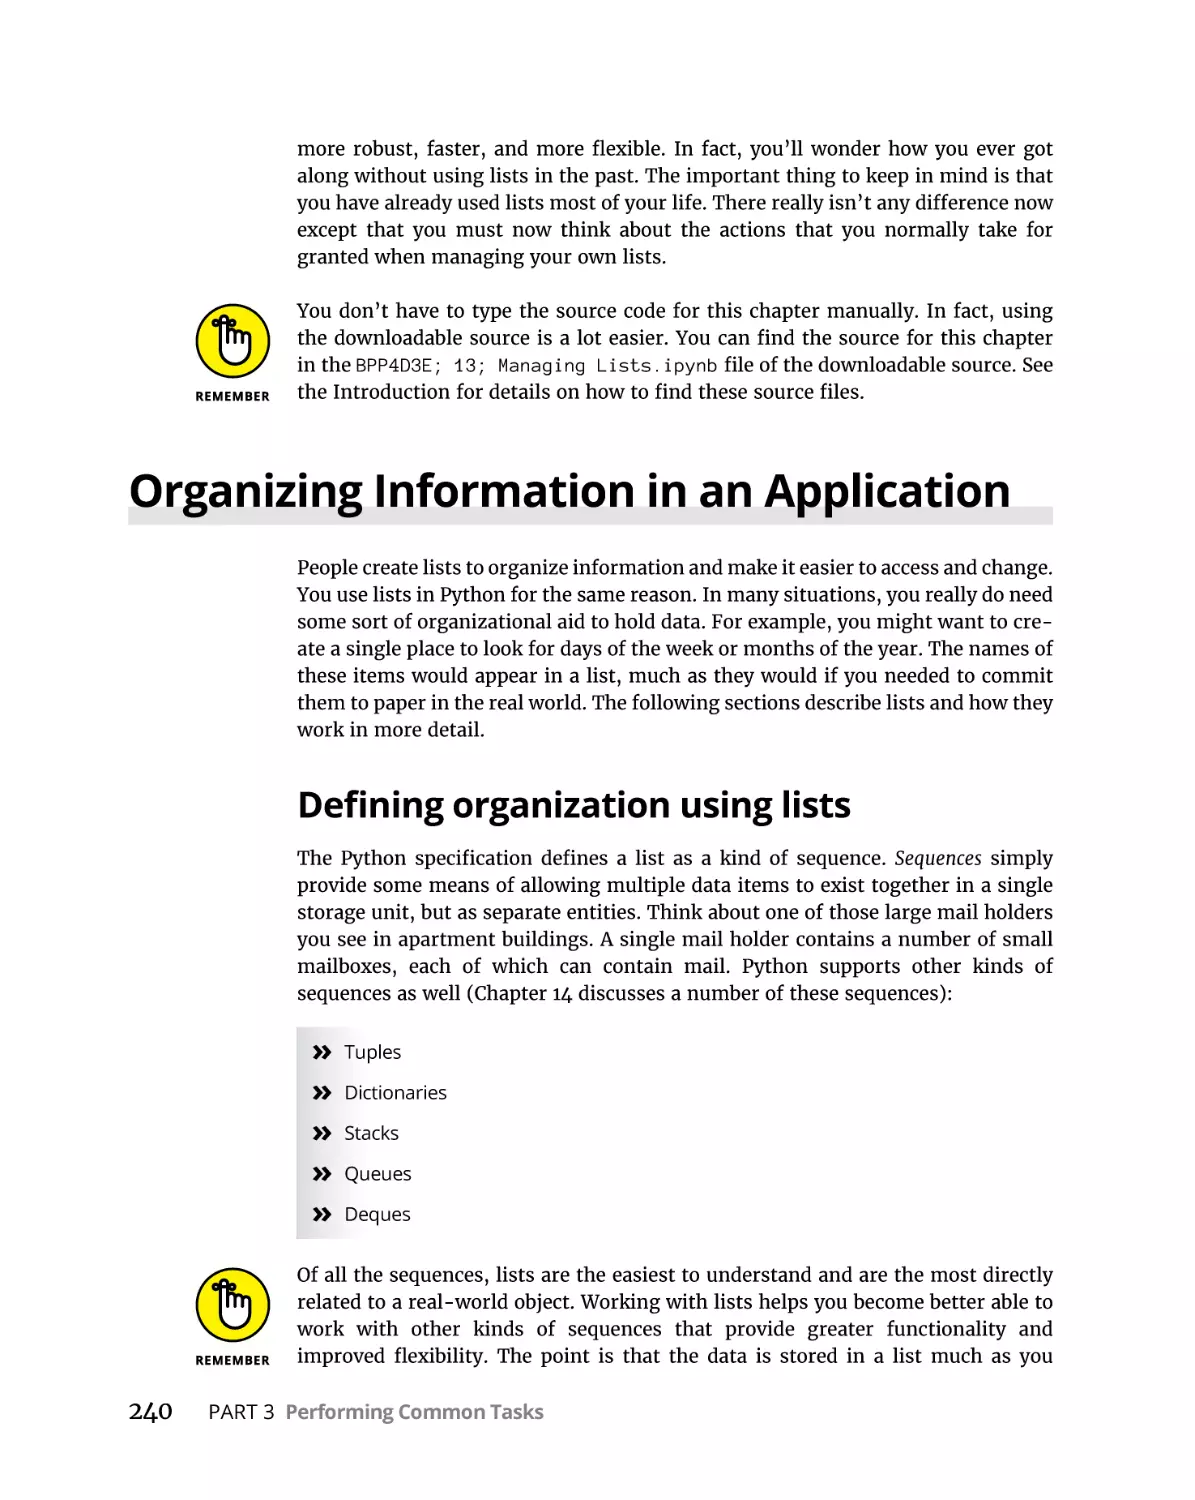 Organizing Information in an Application
Defining organization using lists